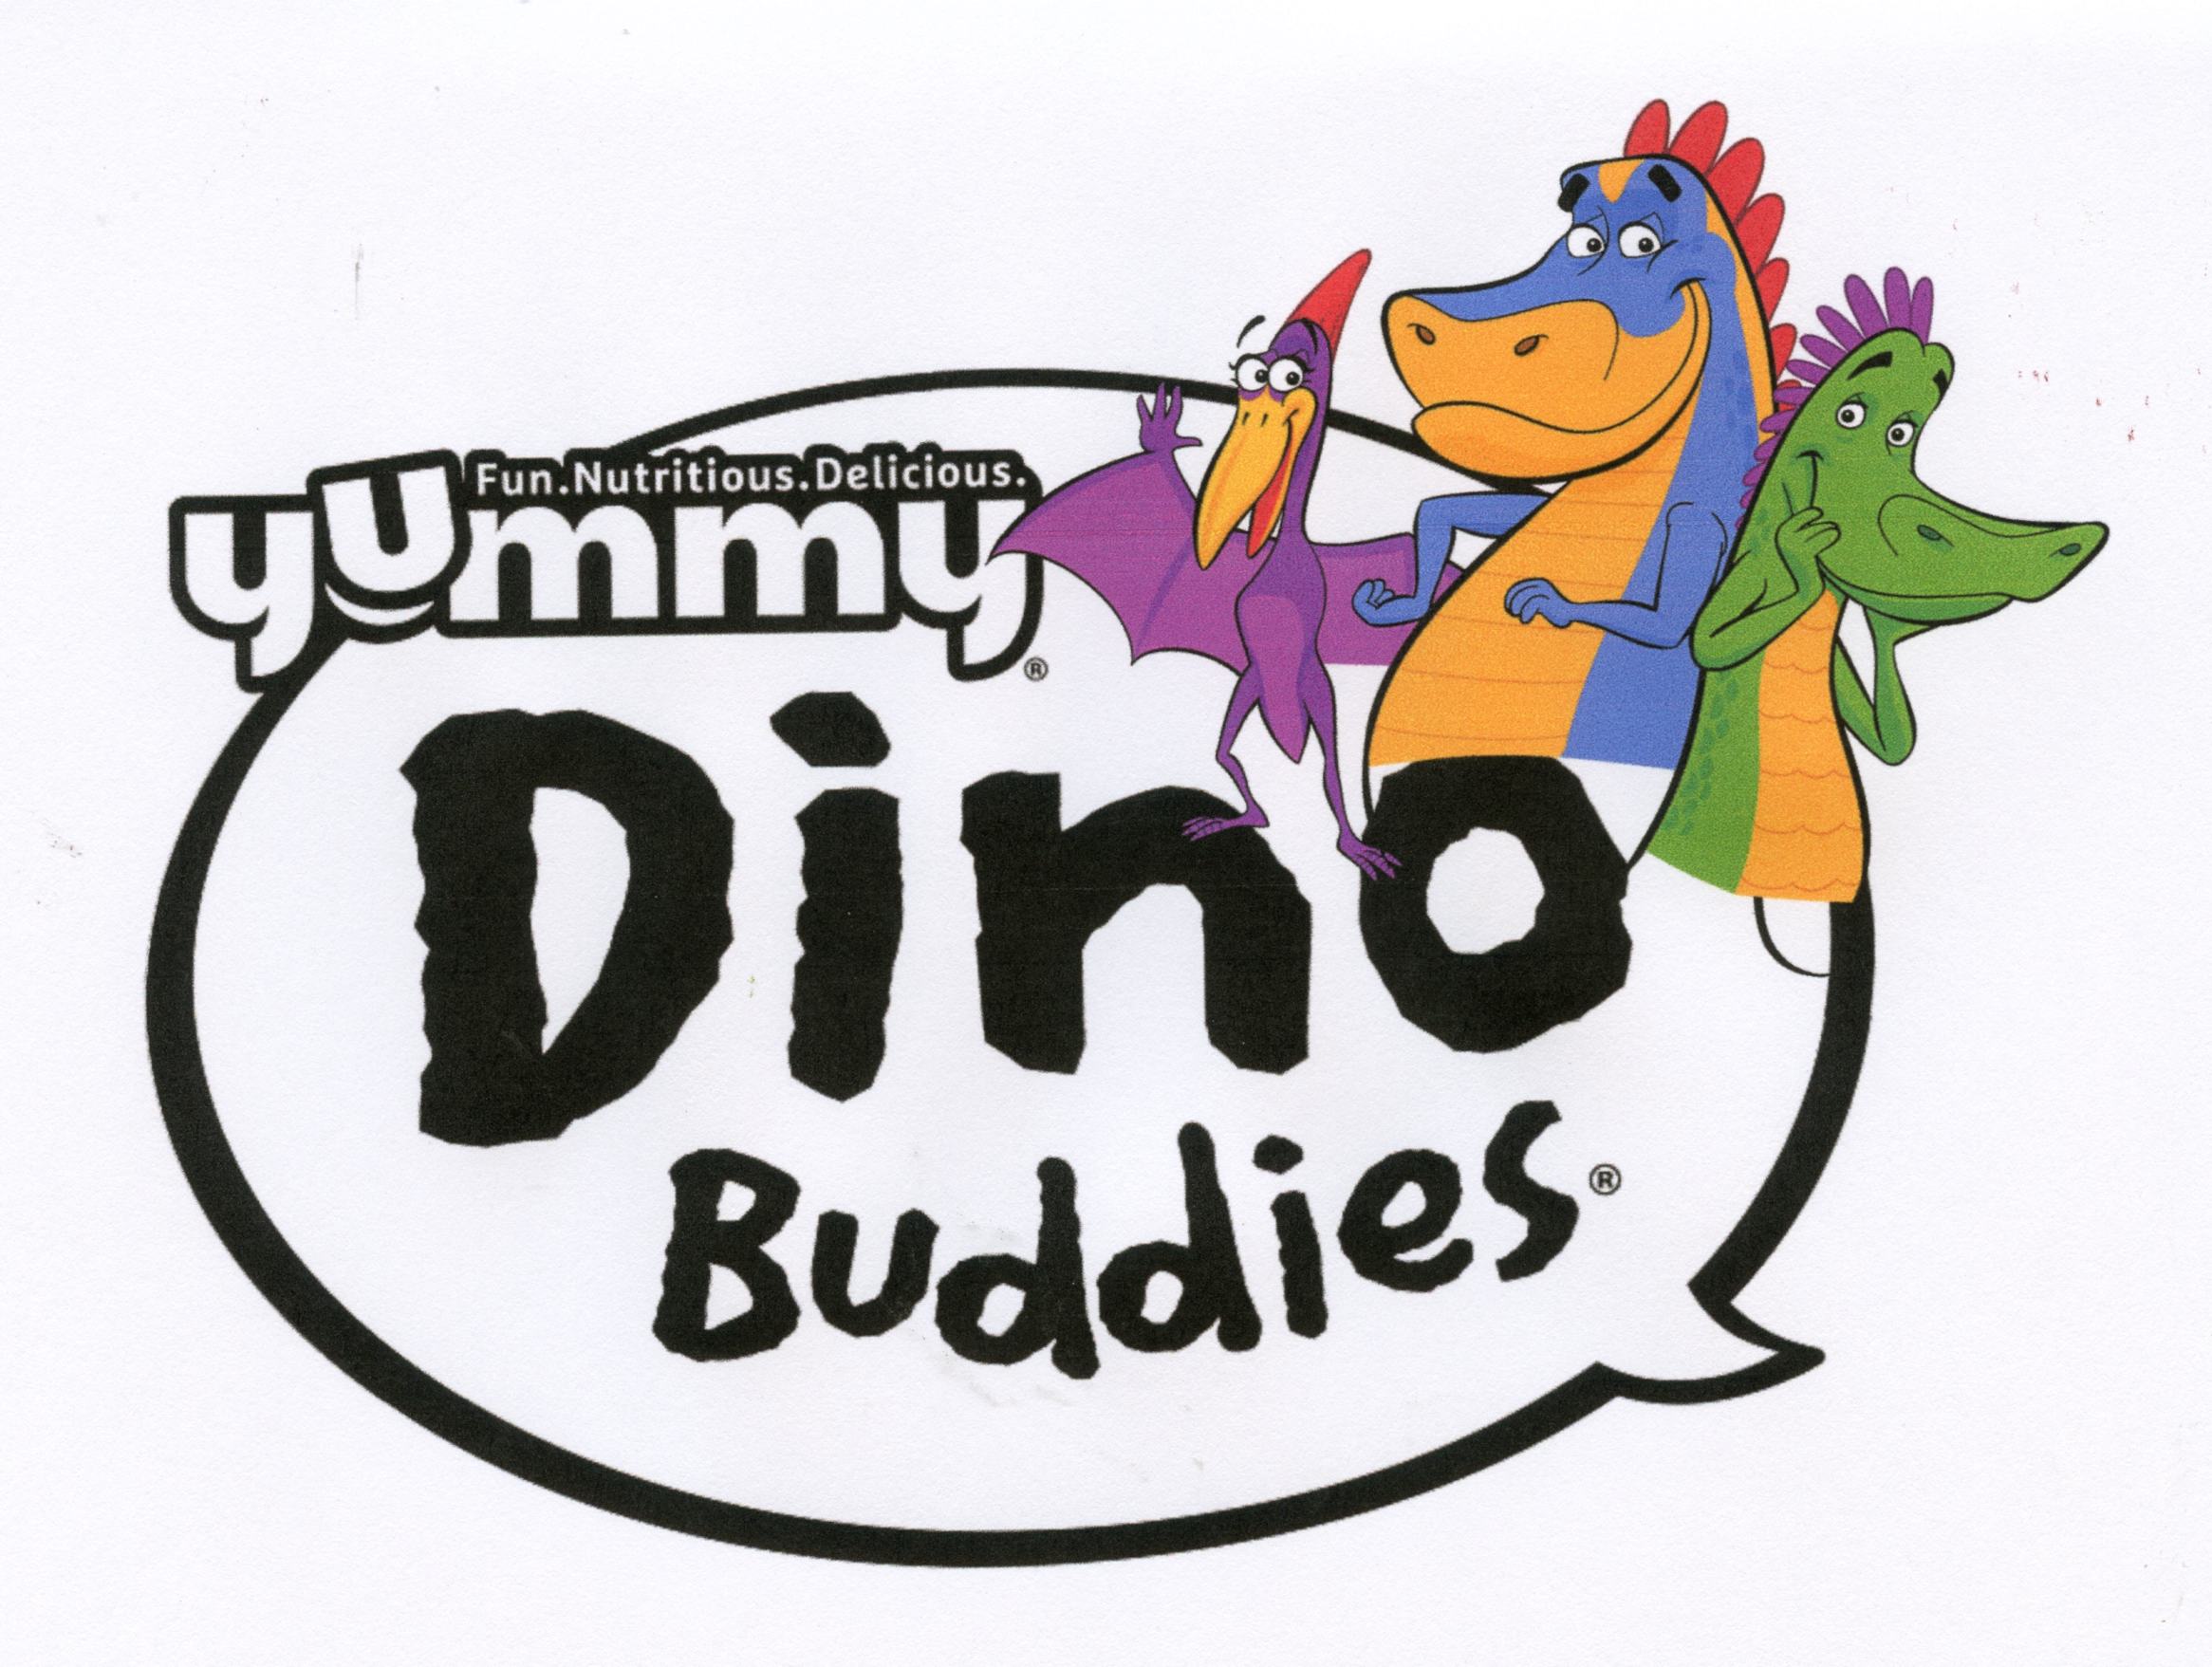 Yummy Dino Buddies